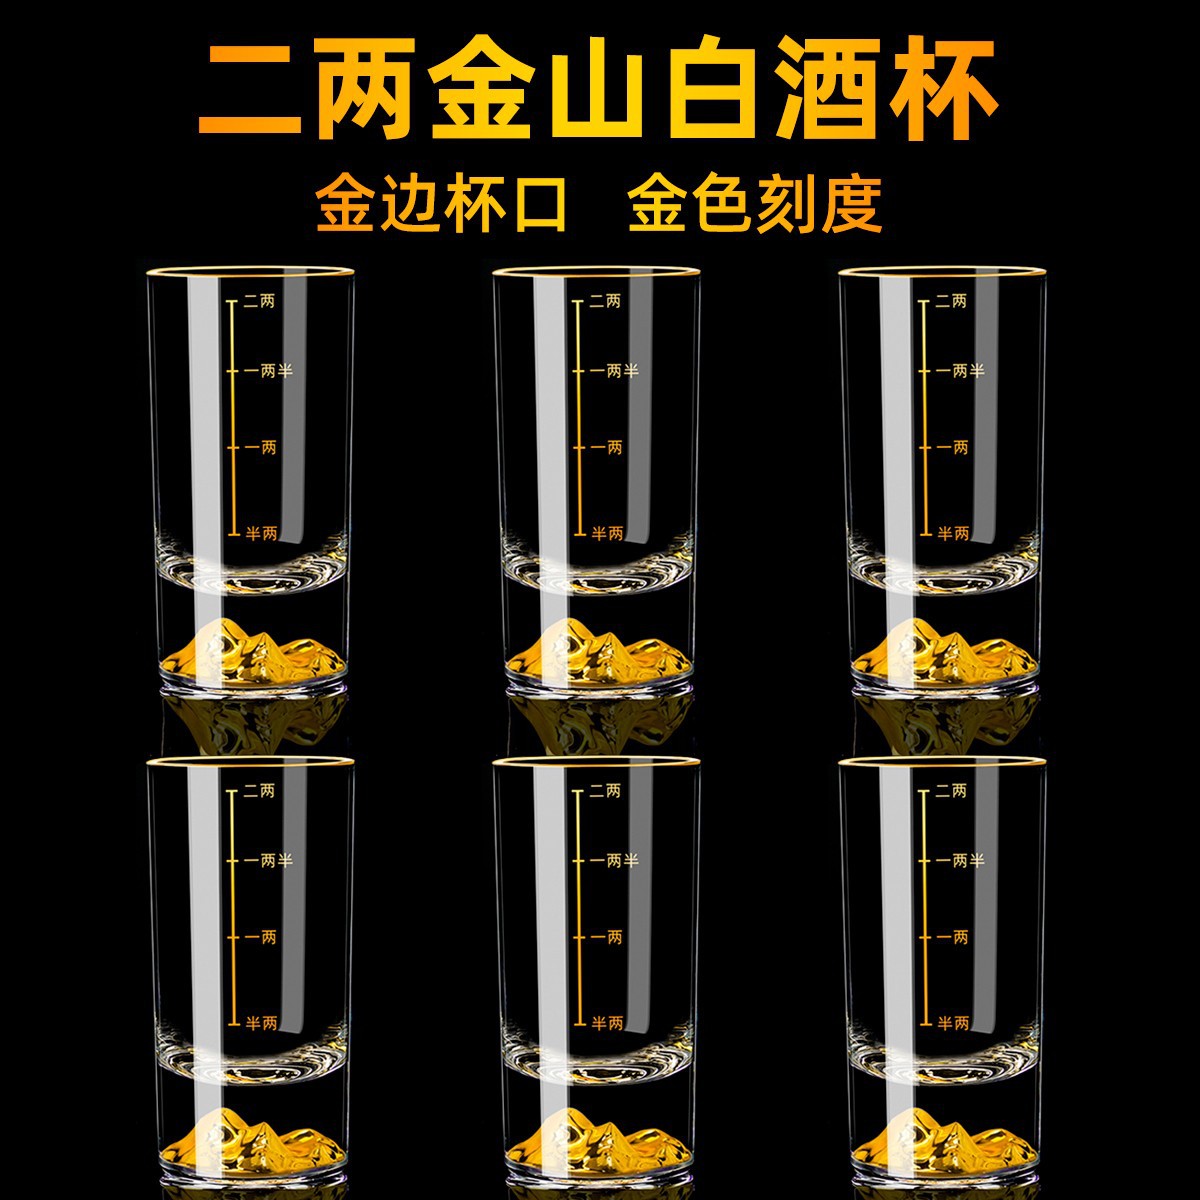 50g or 100g white wine glass sets set household gold foil wine pot crystal wine dispenser scale light luxury wine set